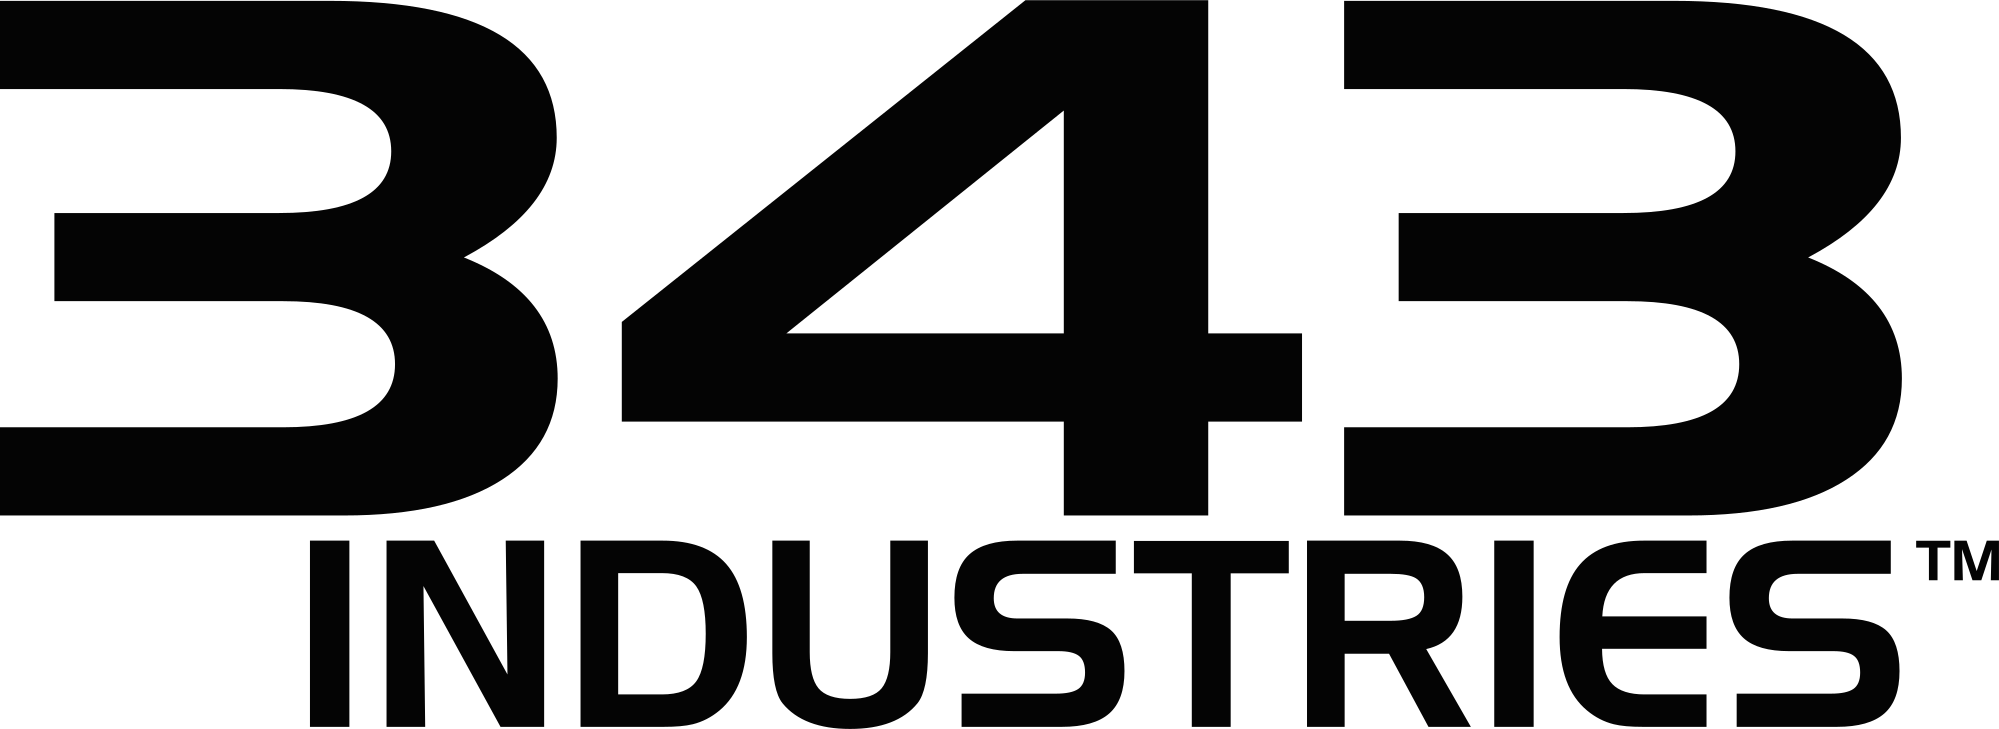 343 Industries - company